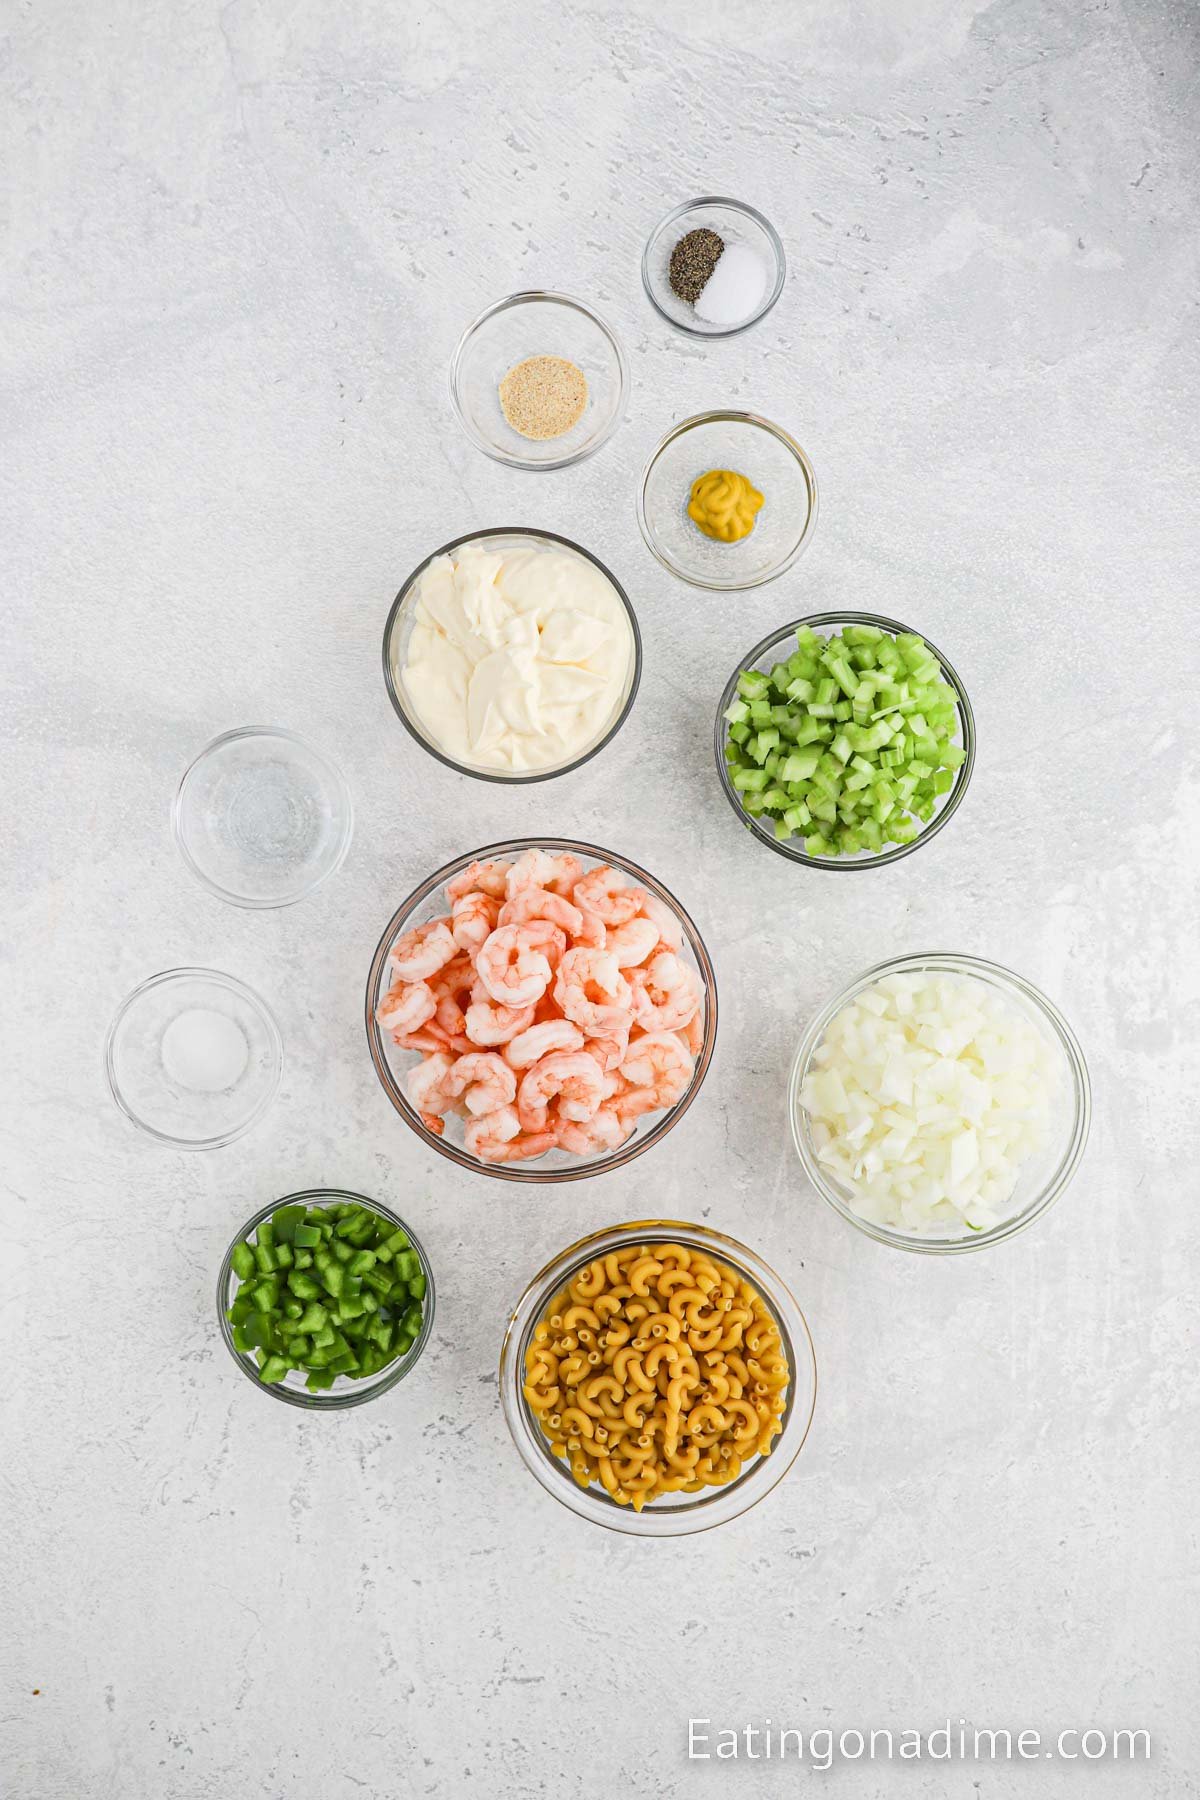 Ingredients needed for Shrimp Macaroni Salad - Macaroni Noodles, celery, green bell pepper, yellow onion, small shrimp, mayonnaise, white vinegar, sugar, yellow mustard, garlic powder, salt, pepper